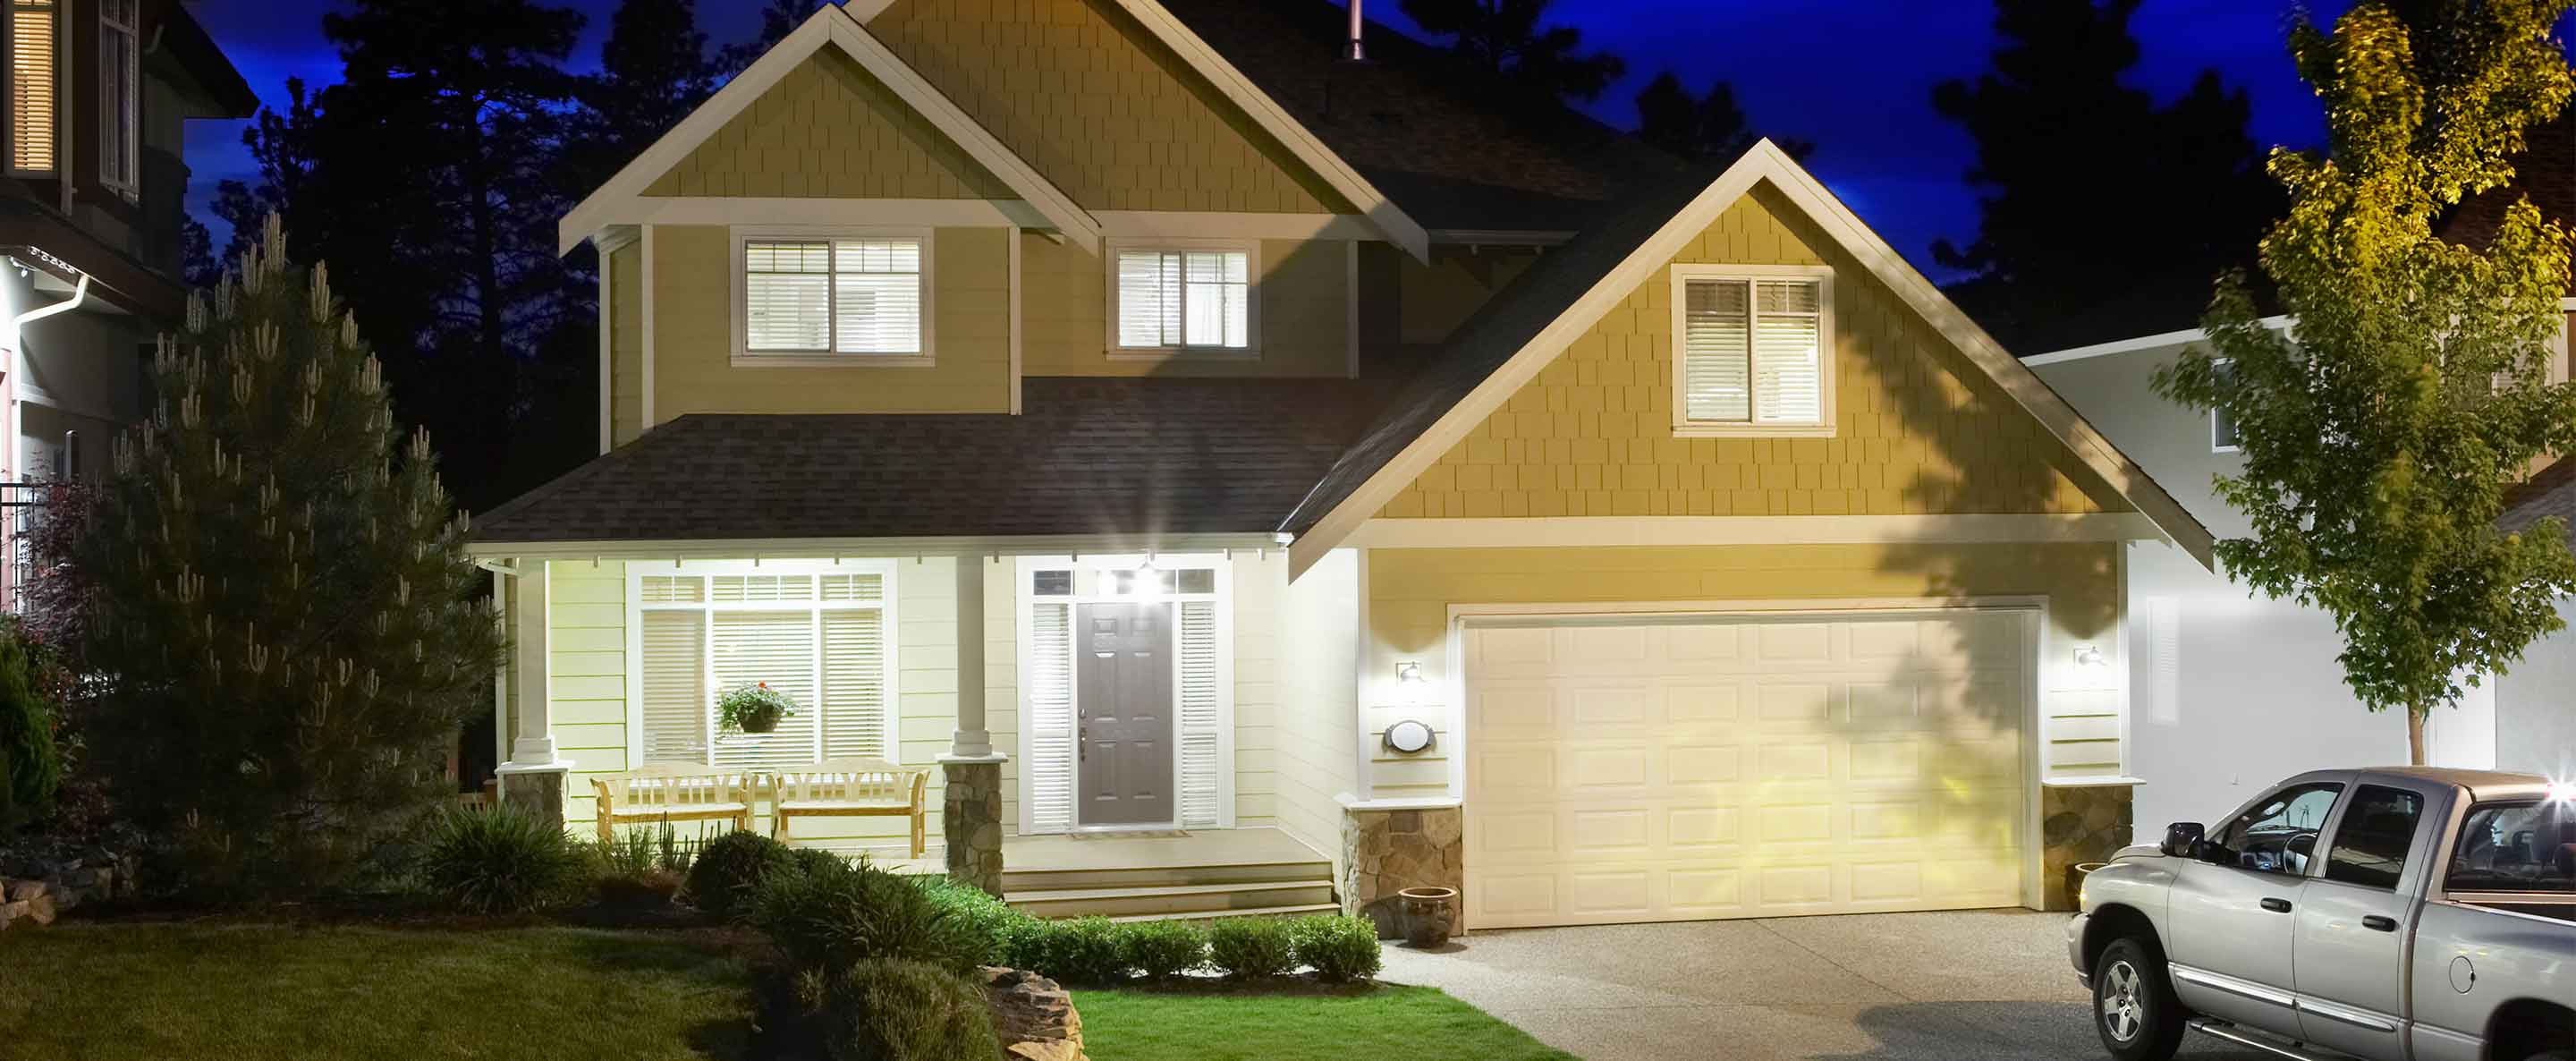 Canada, British Columbia, Kelowna, House exterior and driveway at night